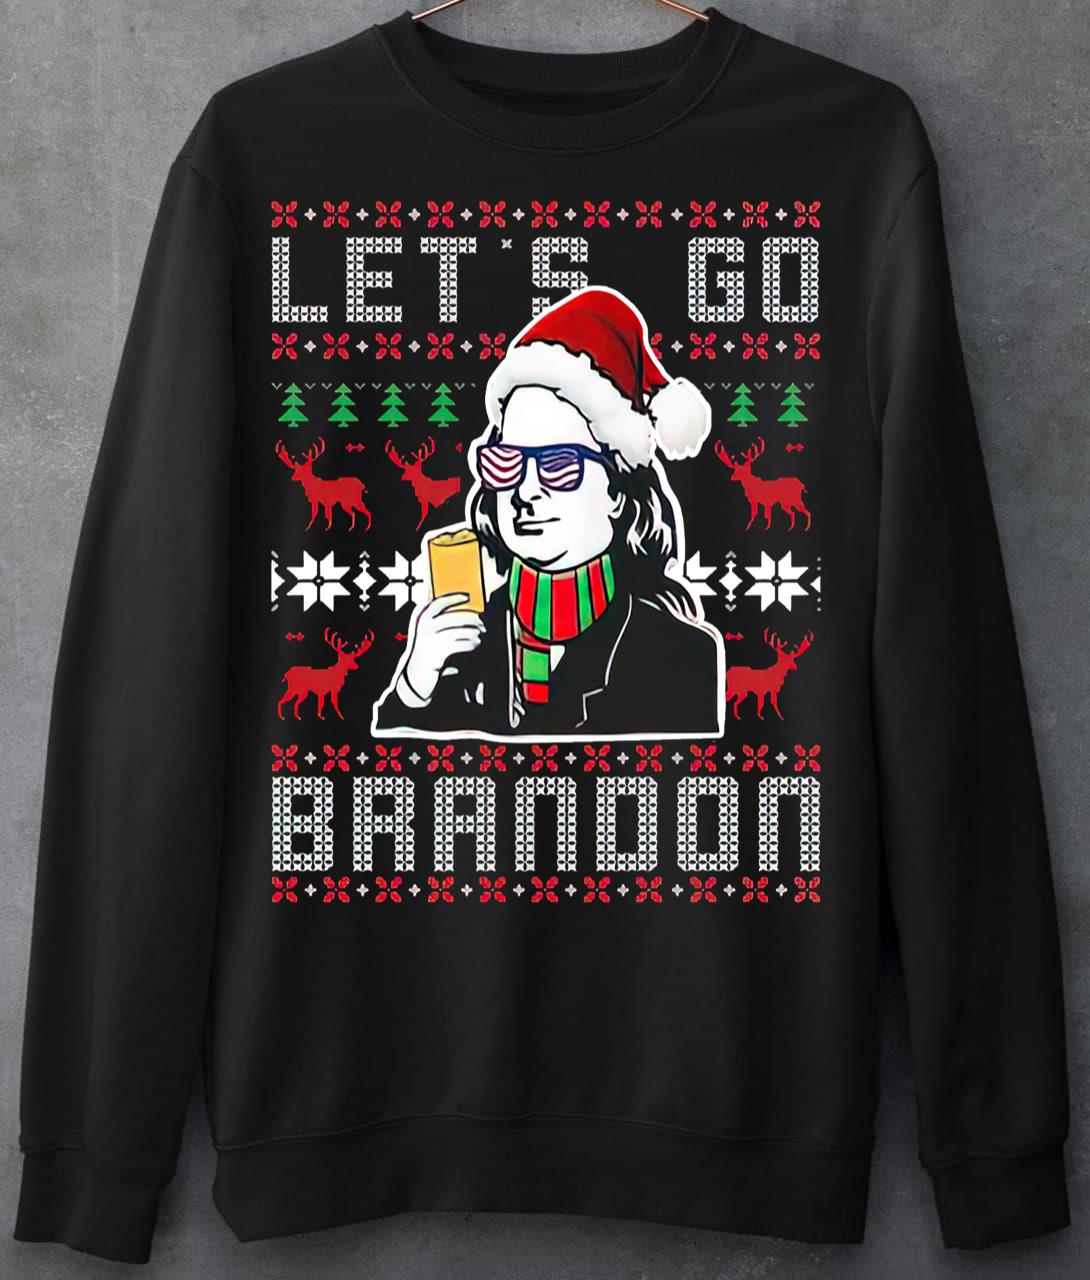 Let’s Go Brandon T-Shirt Christmas Benjamin